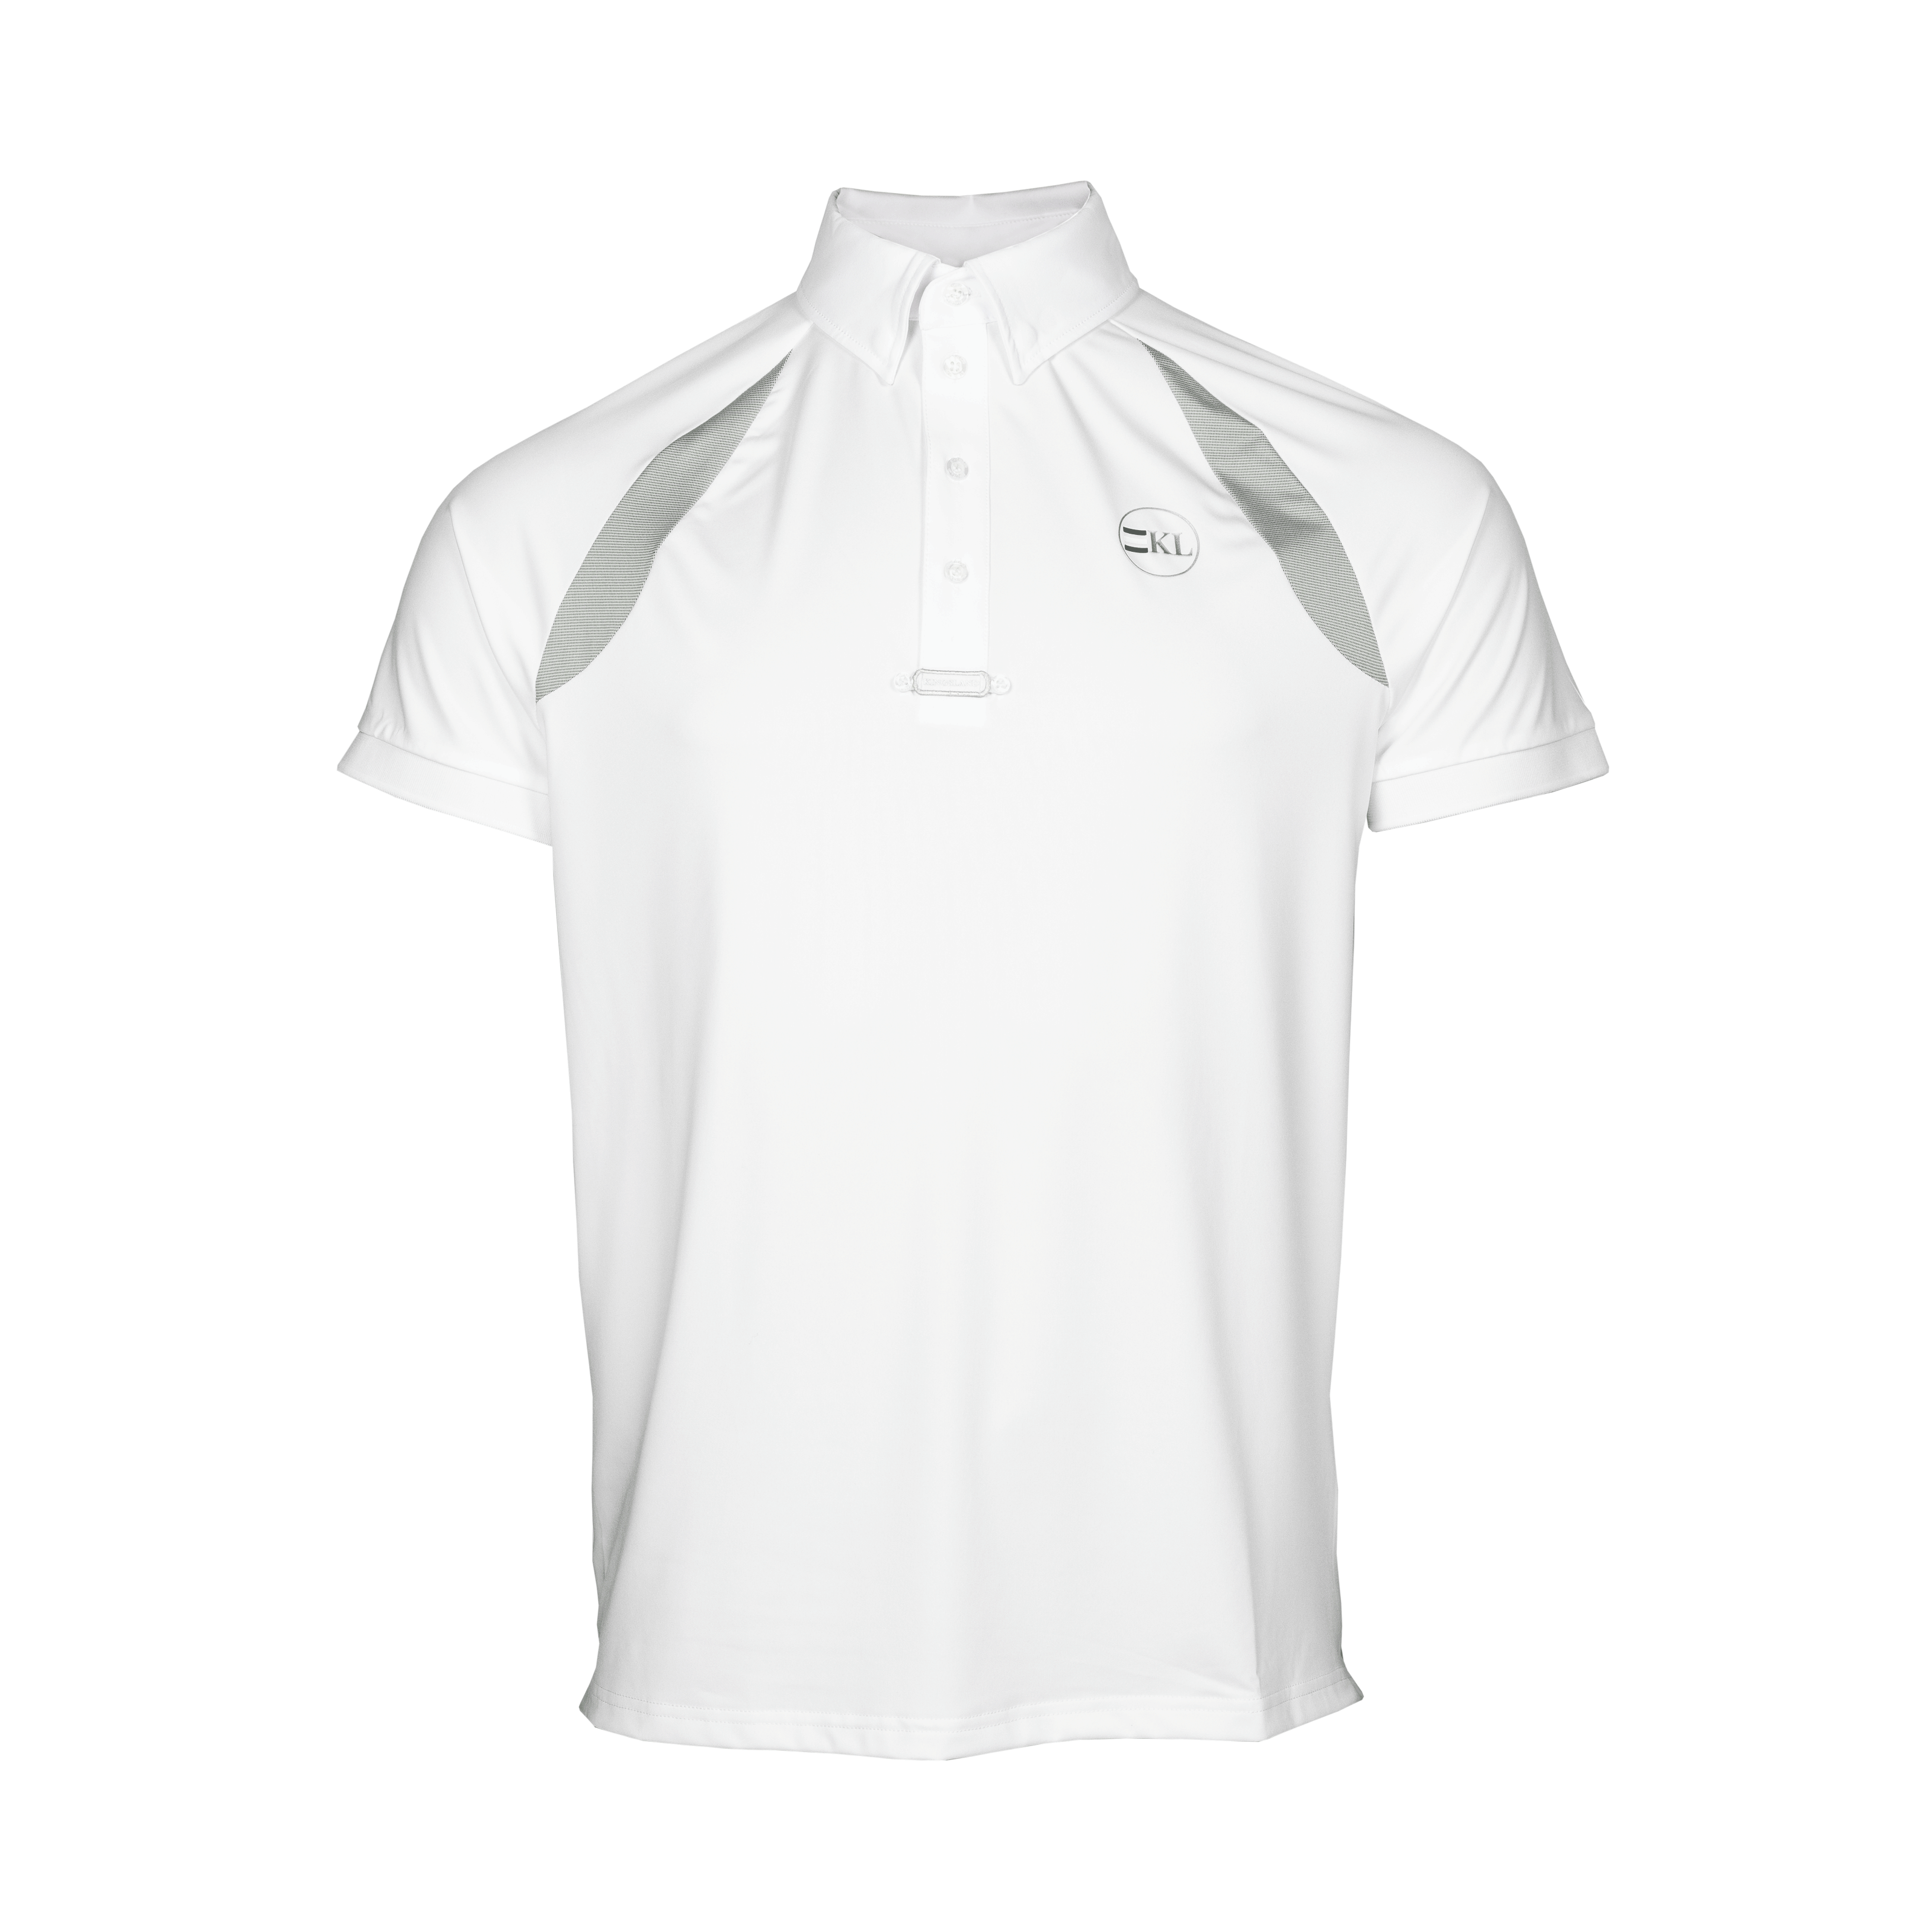 Kingsland KLbryce Herren-Turniershirt, White